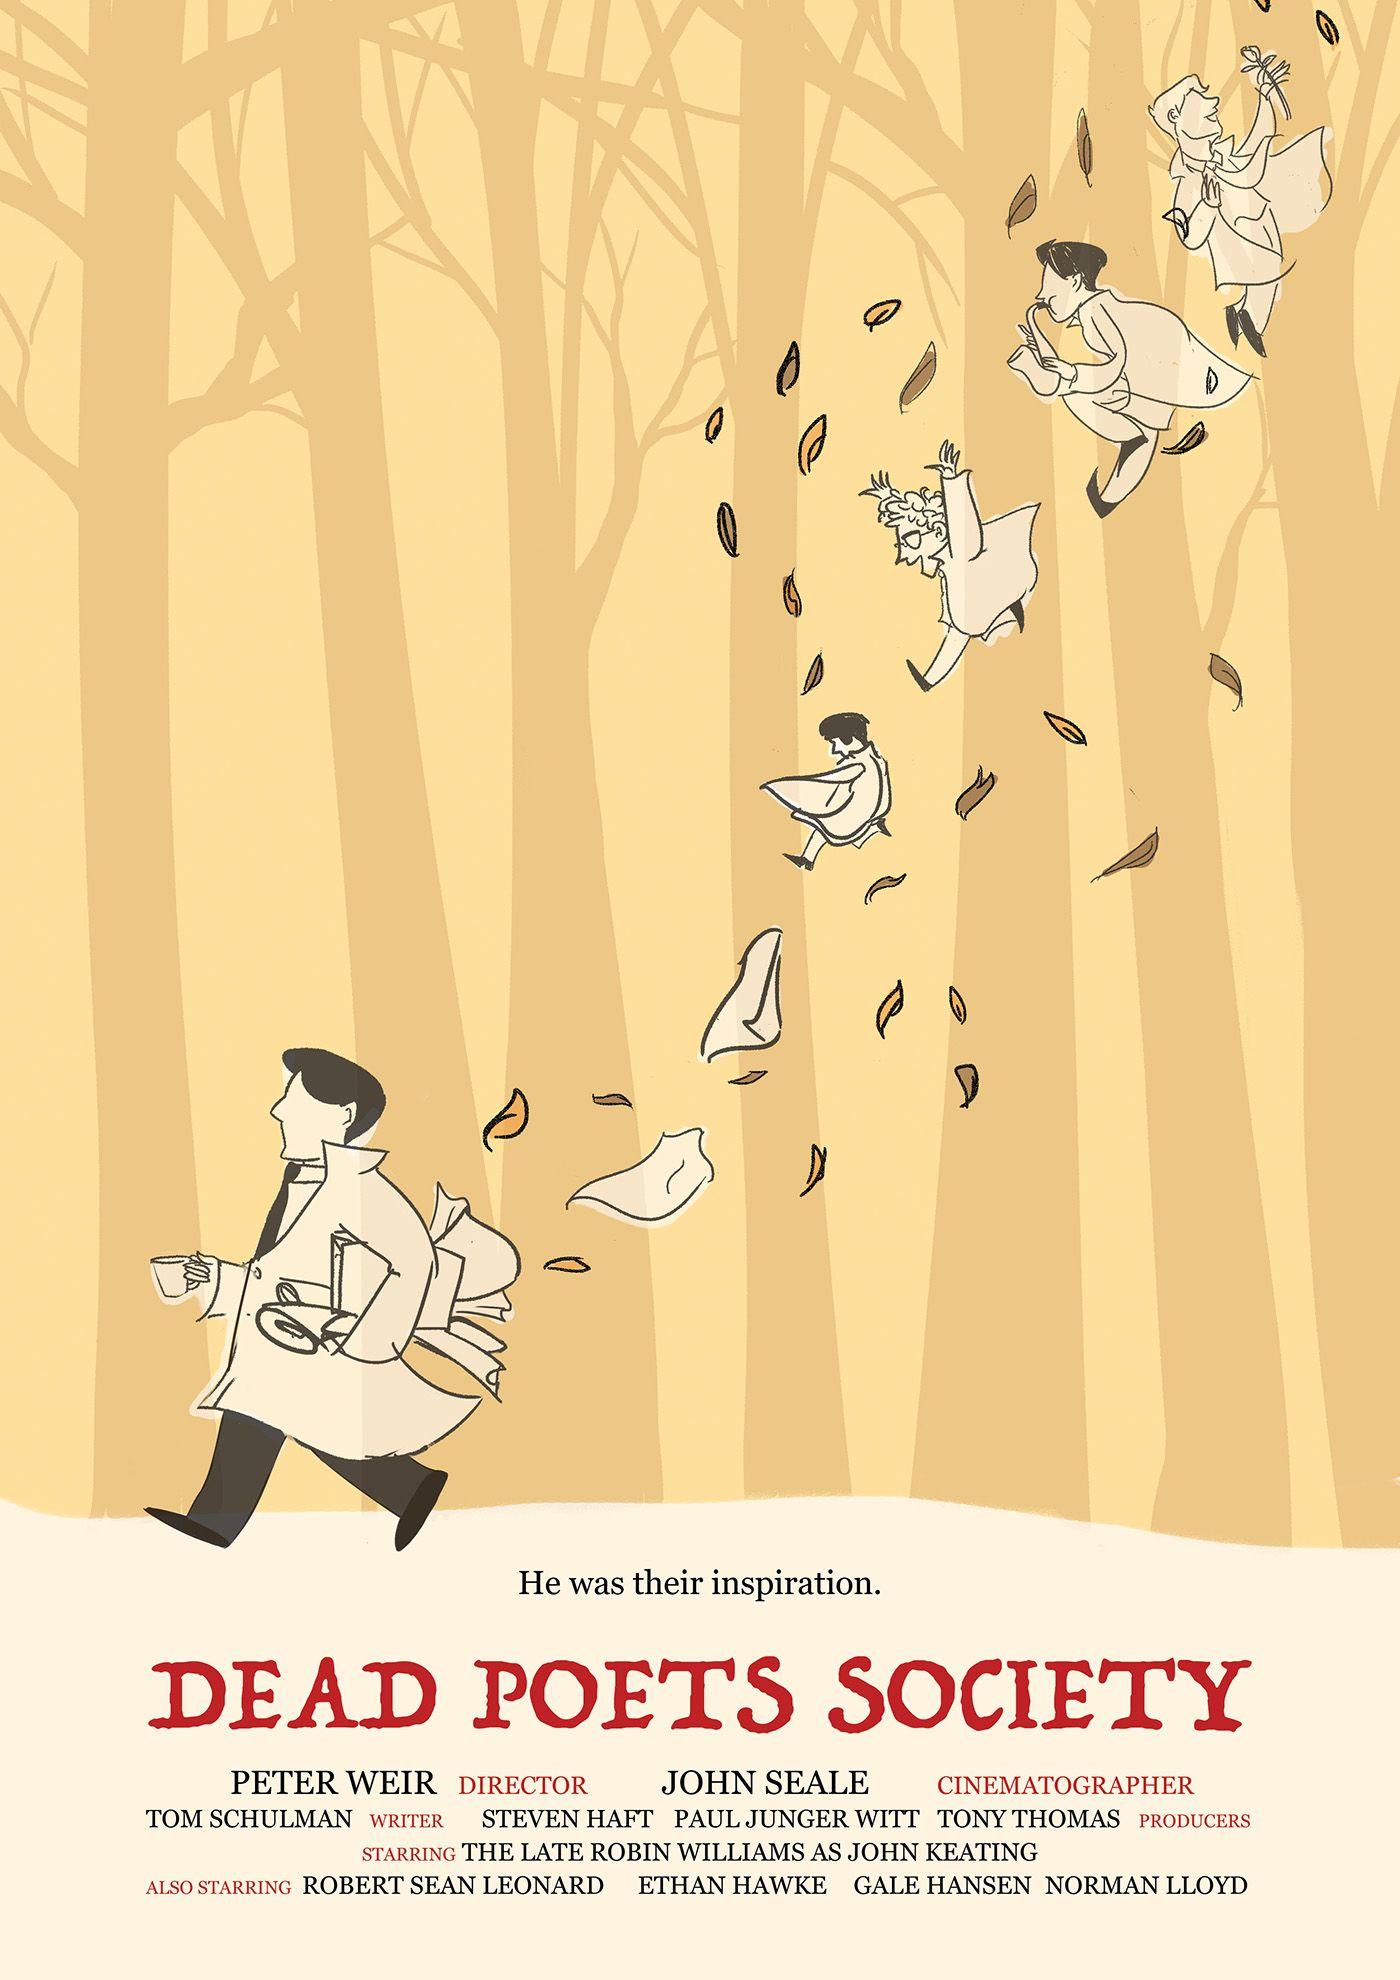 Dead Poets Society Movie Poster Wallpaper Wp5604284